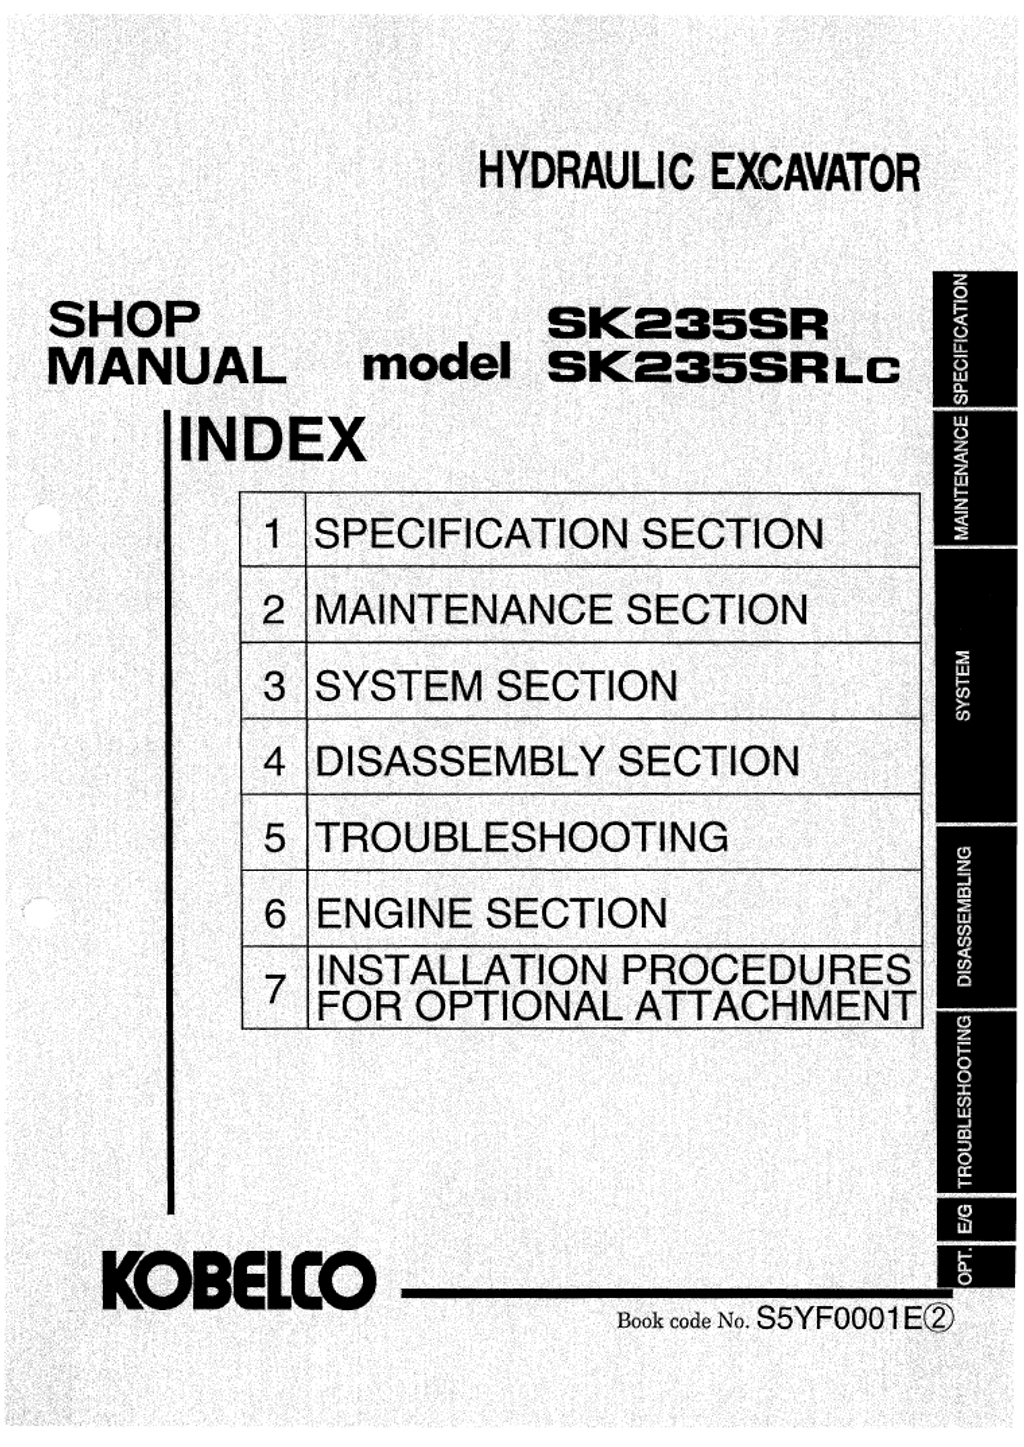 EPC17-Kobelco Shop Manual_08